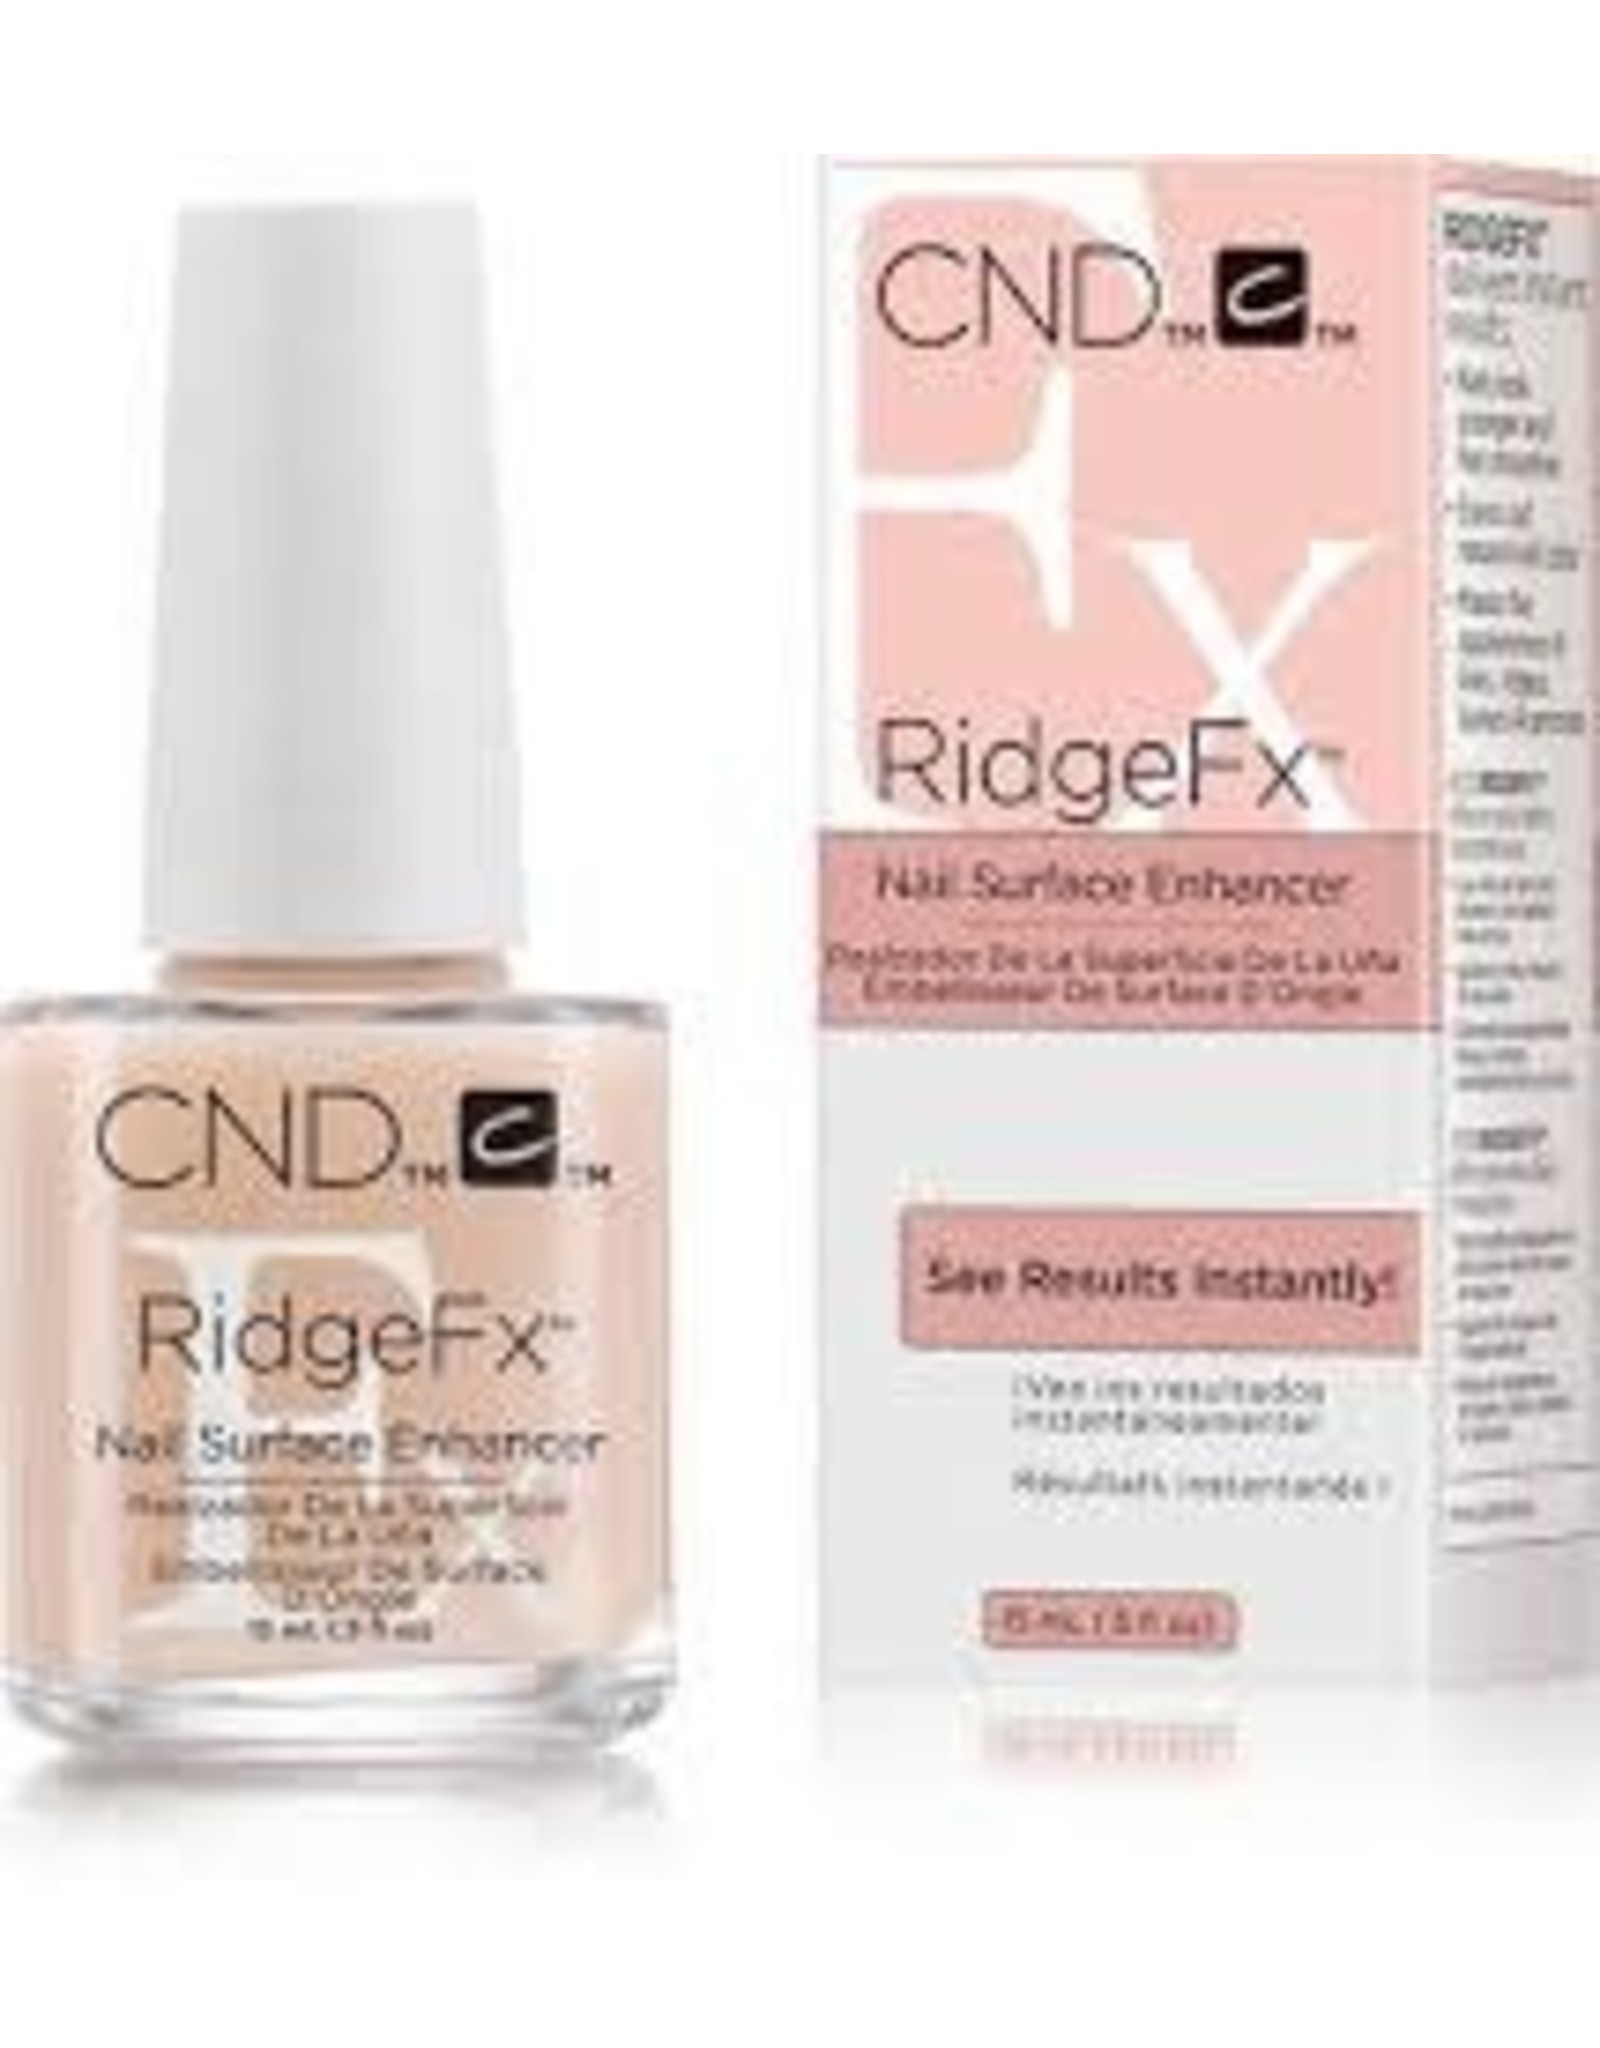 CND CND RidgeFx Nail Surface Enhancer 15ml